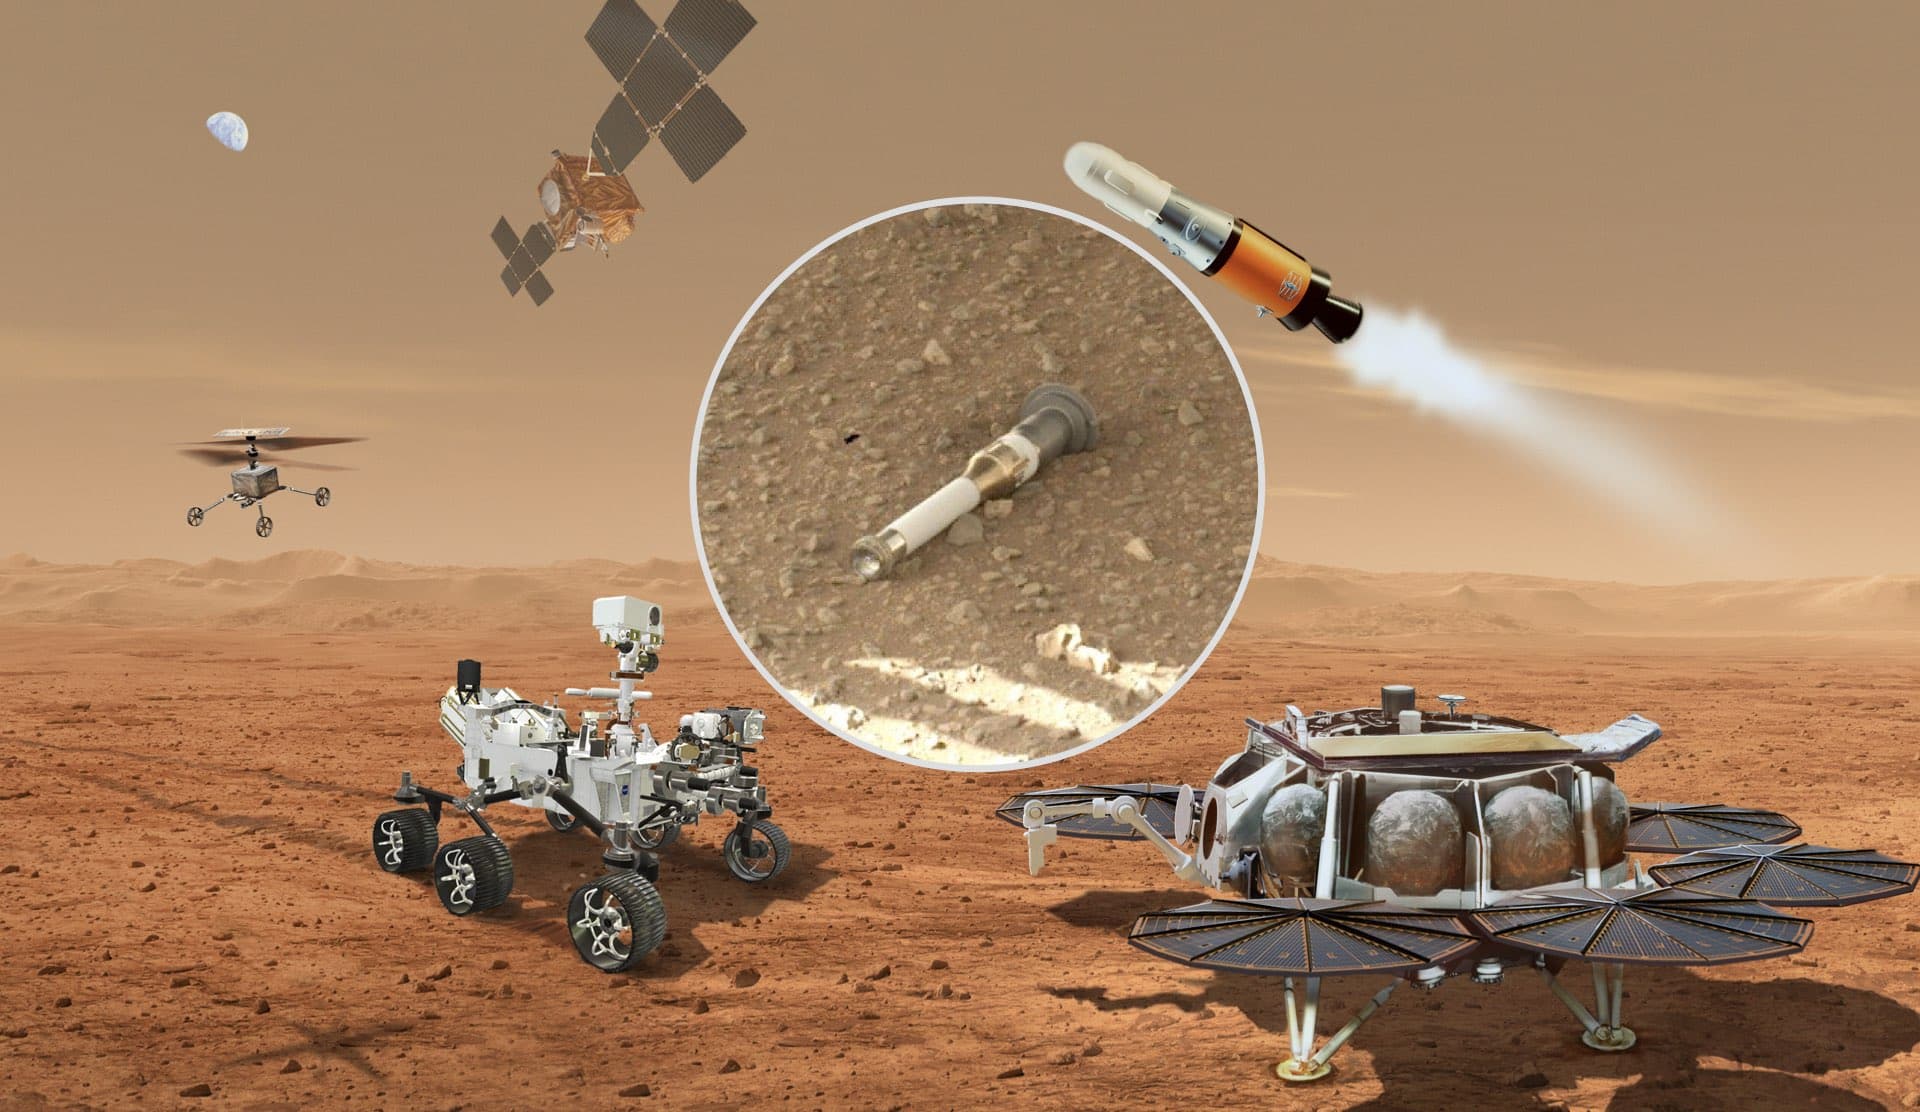 Sample return from Mars: NASA seeks alternatives